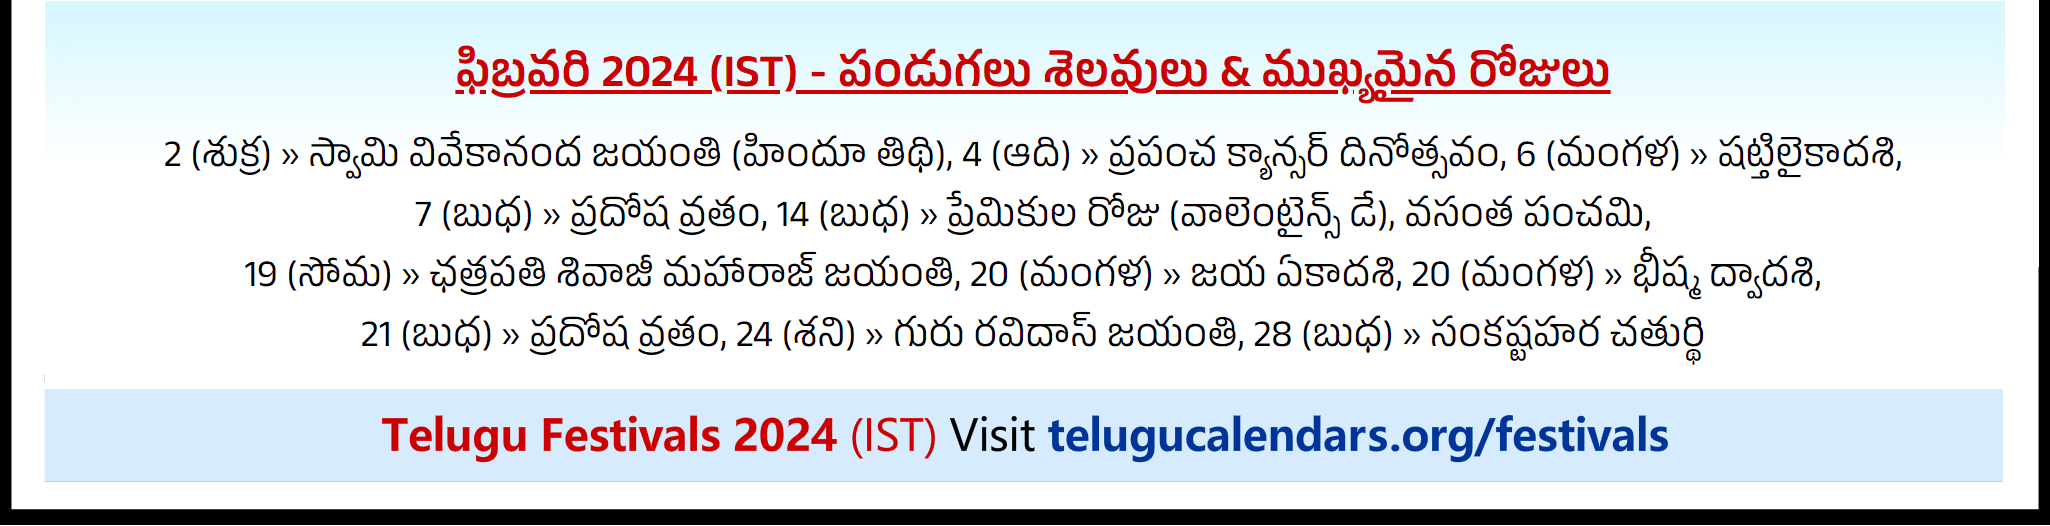 Telugu Festivals 2024 February Los Angeles